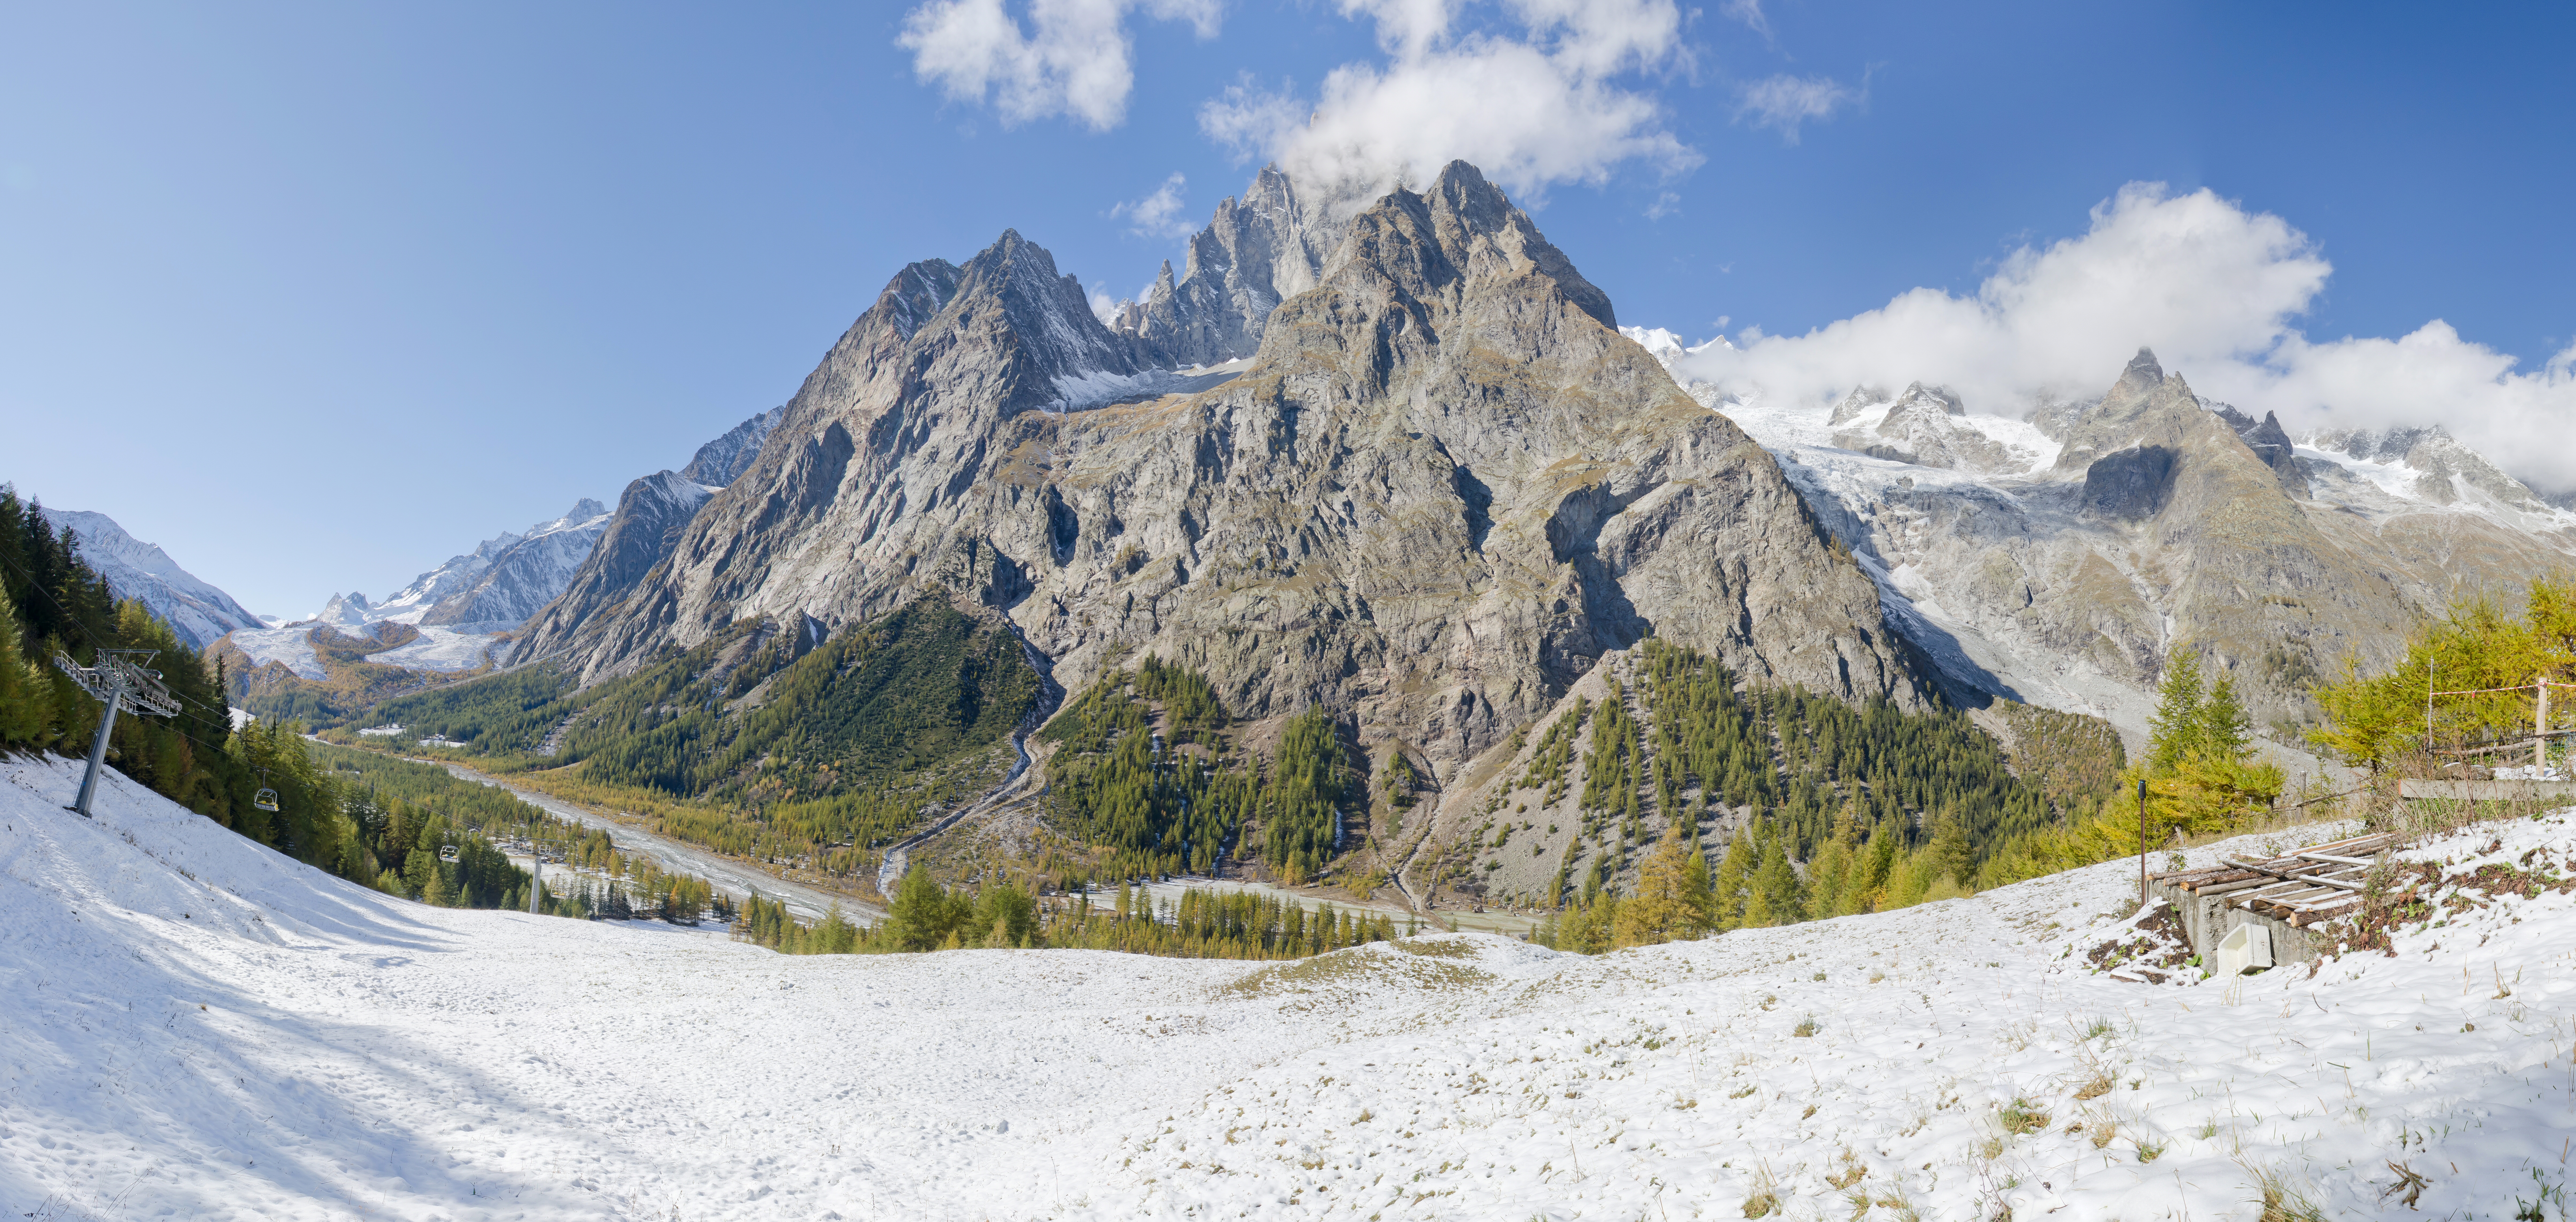 A Spontaneous Adventure in the Alps - The Tour du Mont Blanc